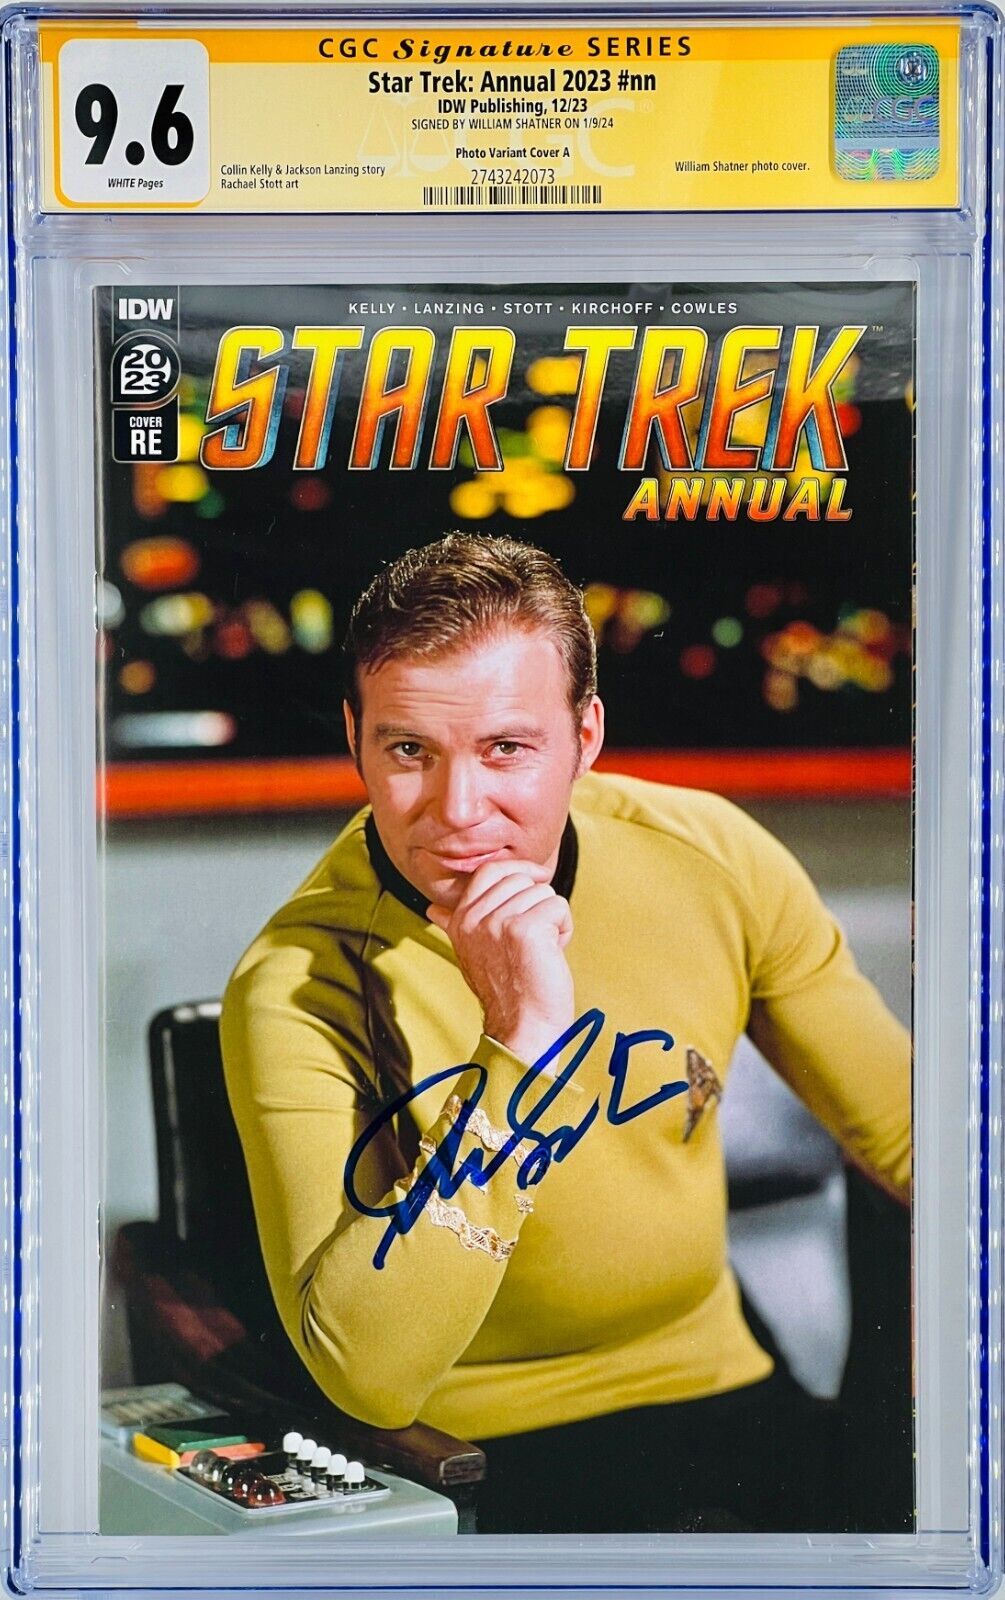 William Shatner Signed Photo Cover CGC SS Graded 9.6 Star Trek Annual #nn